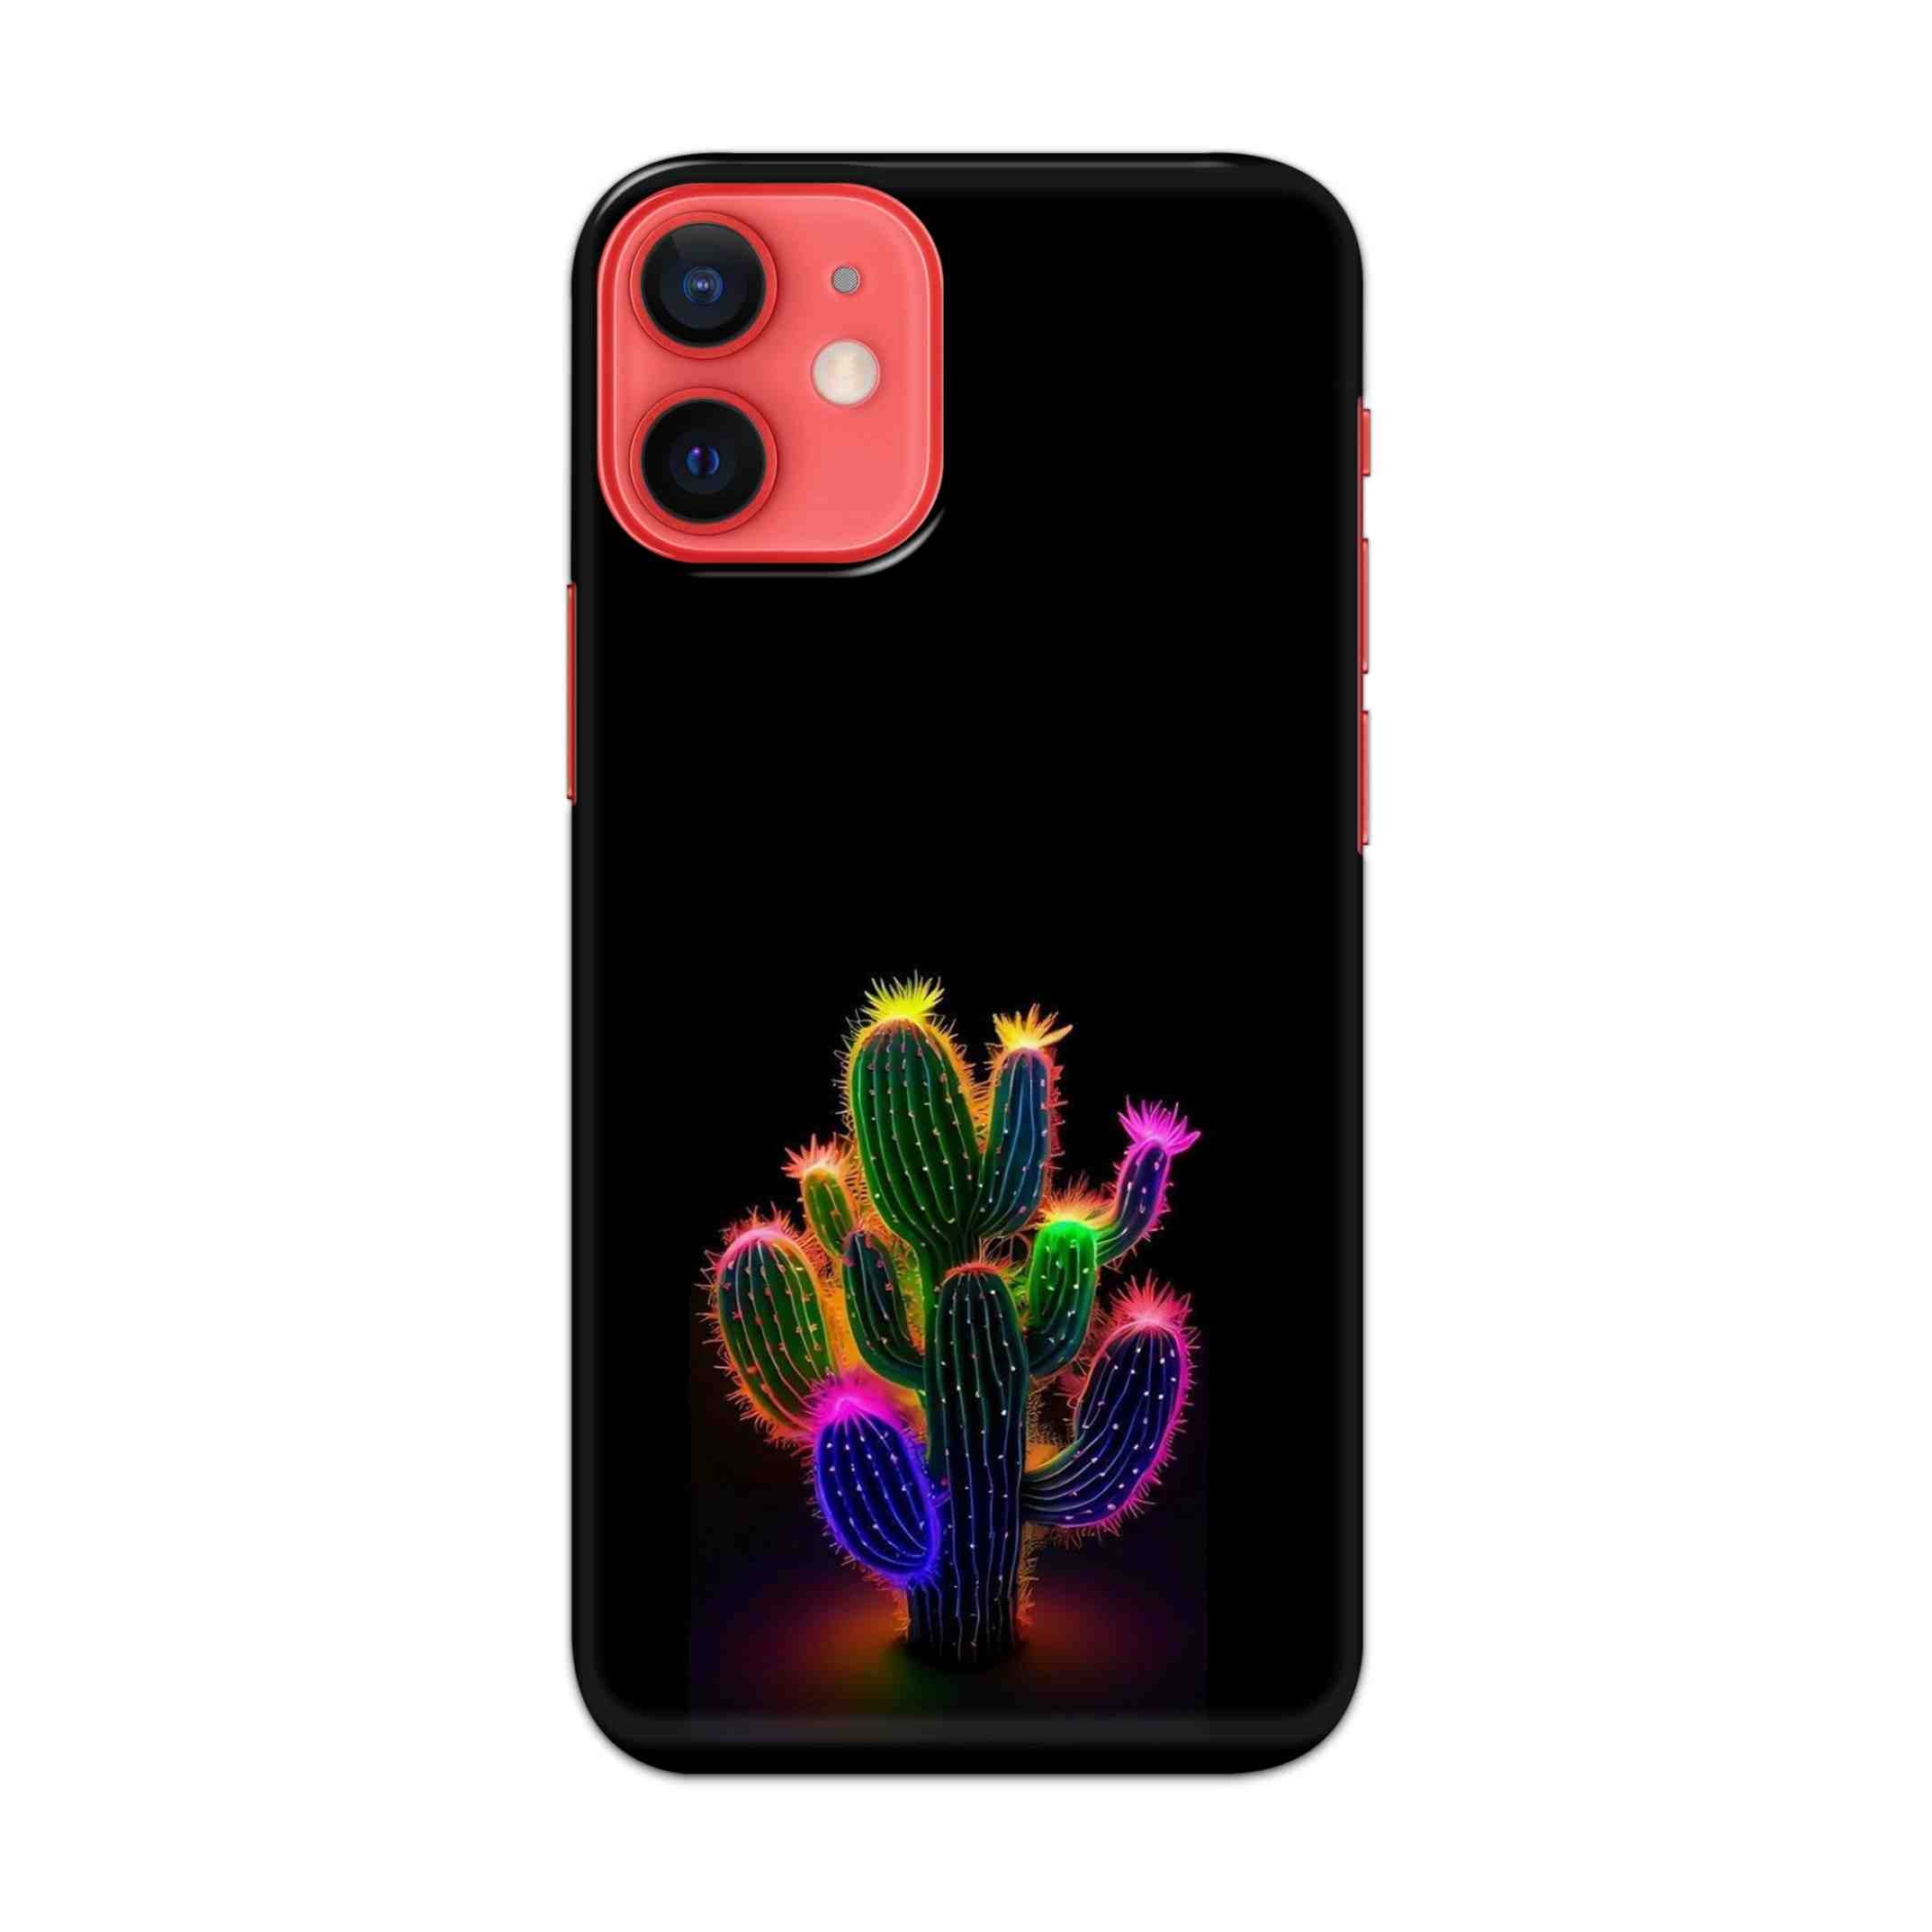 Buy Neon Flower Hard Back Mobile Phone Case/Cover For Apple iPhone 12 mini Online